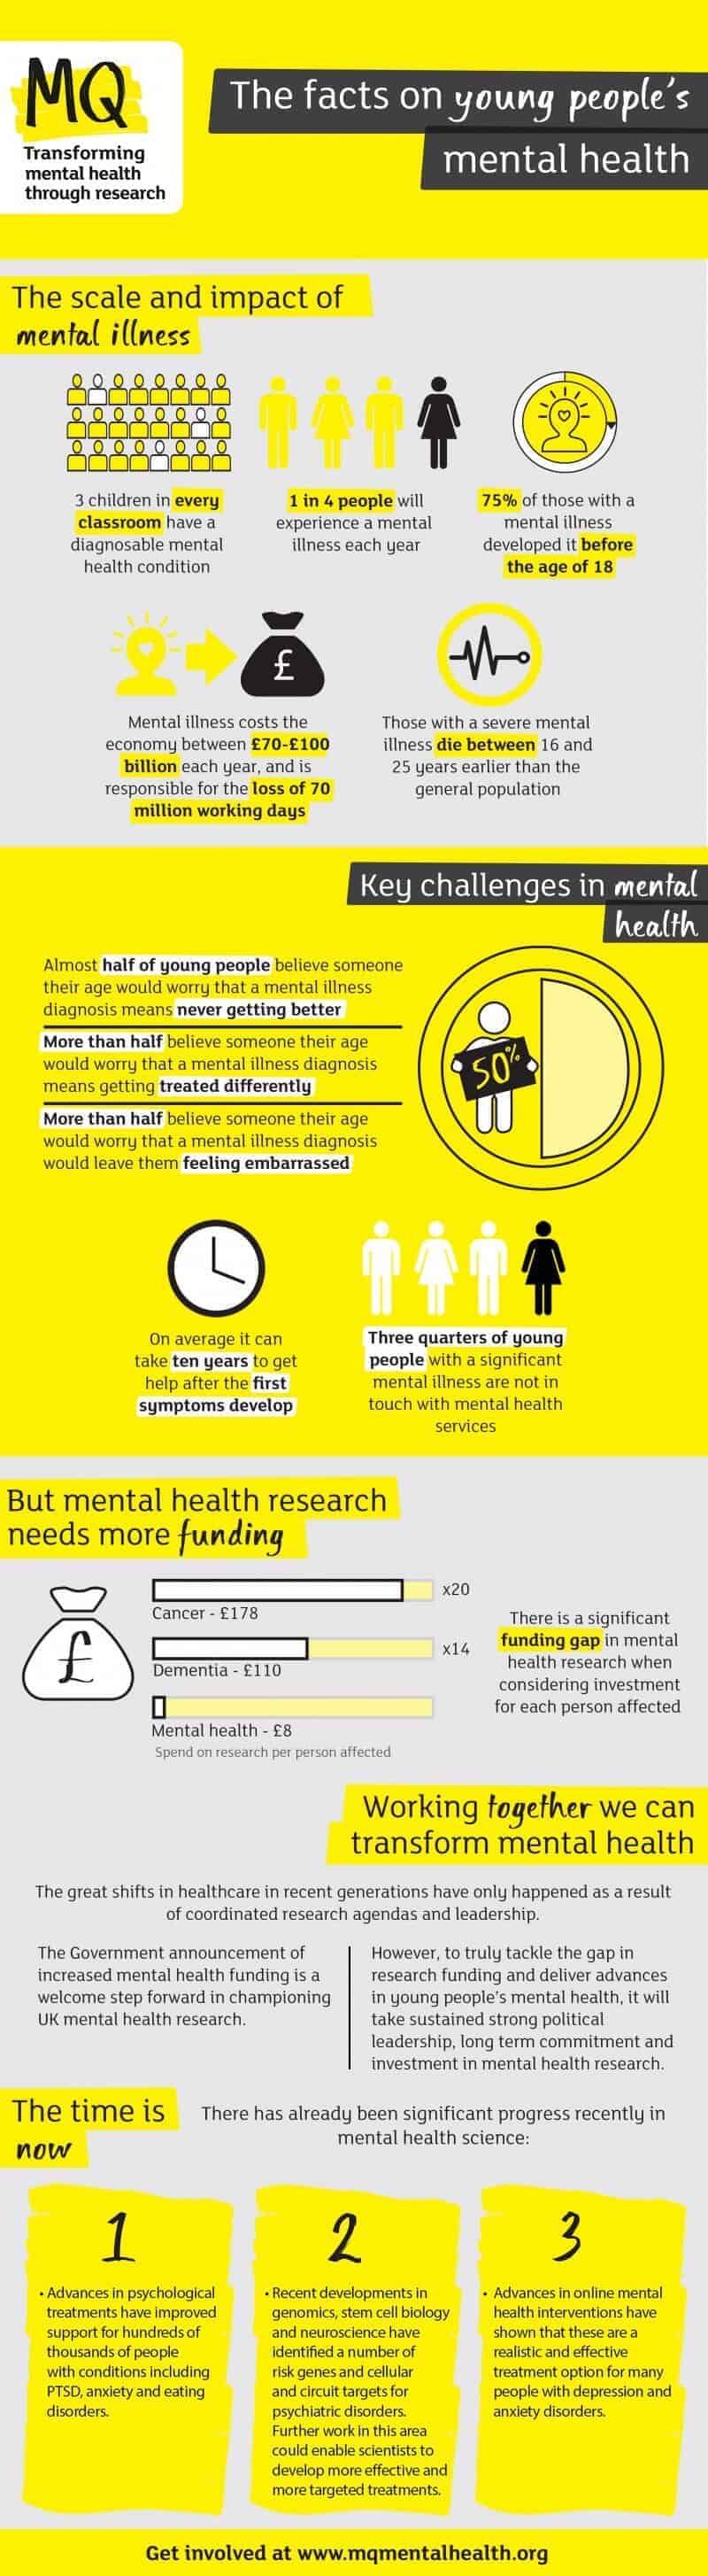 MQ Mental Health Infographic